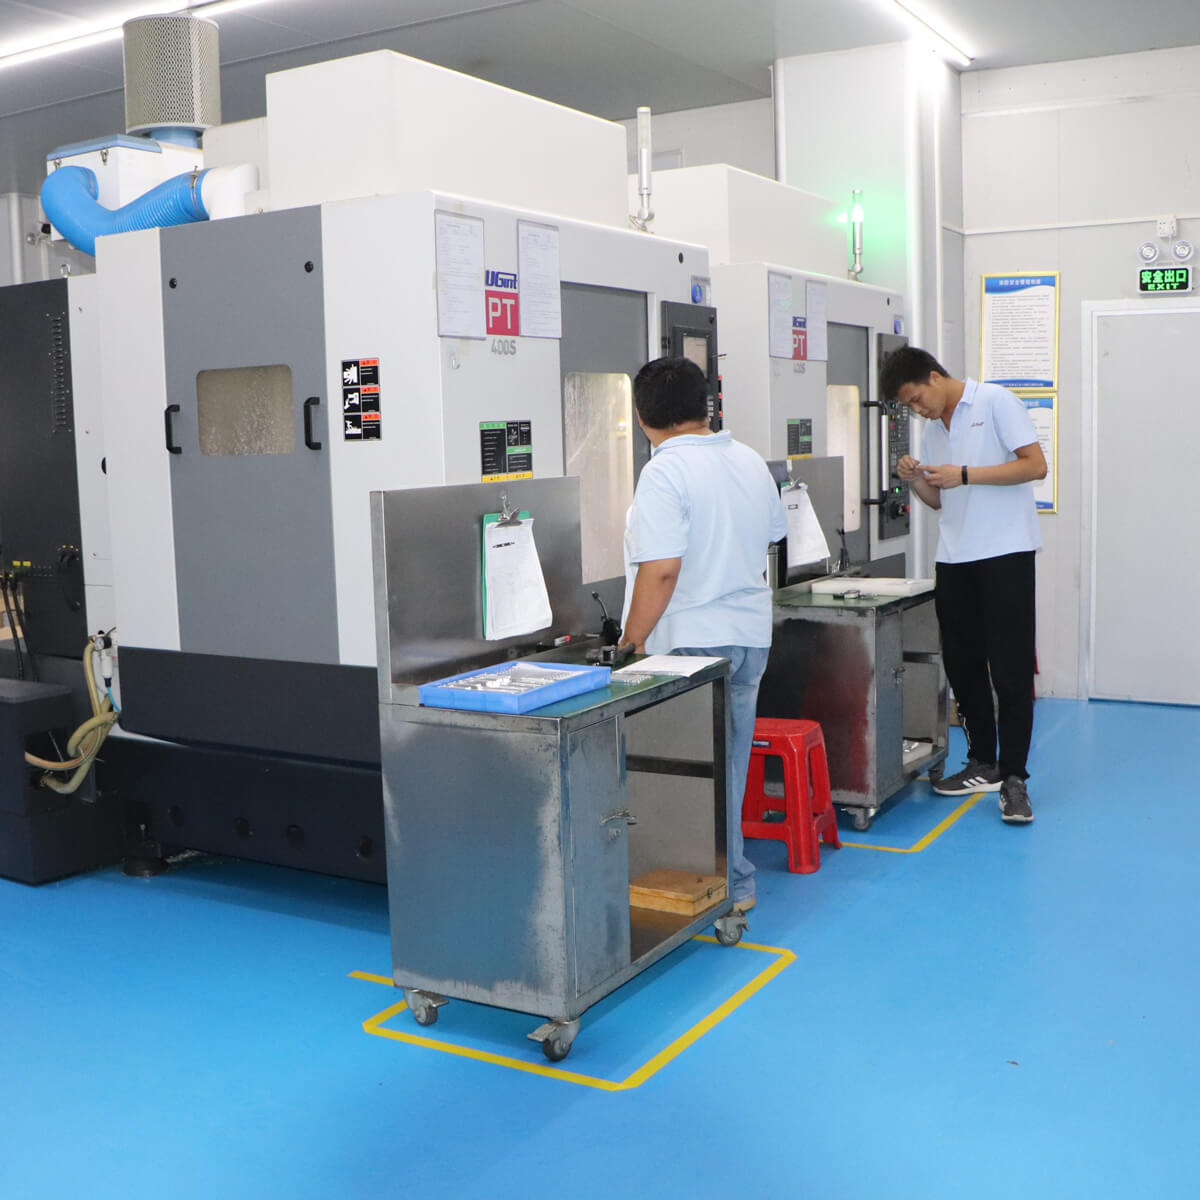 Xavier aluminum alloy cnc milling machine parts long-lasting durability die casting-6